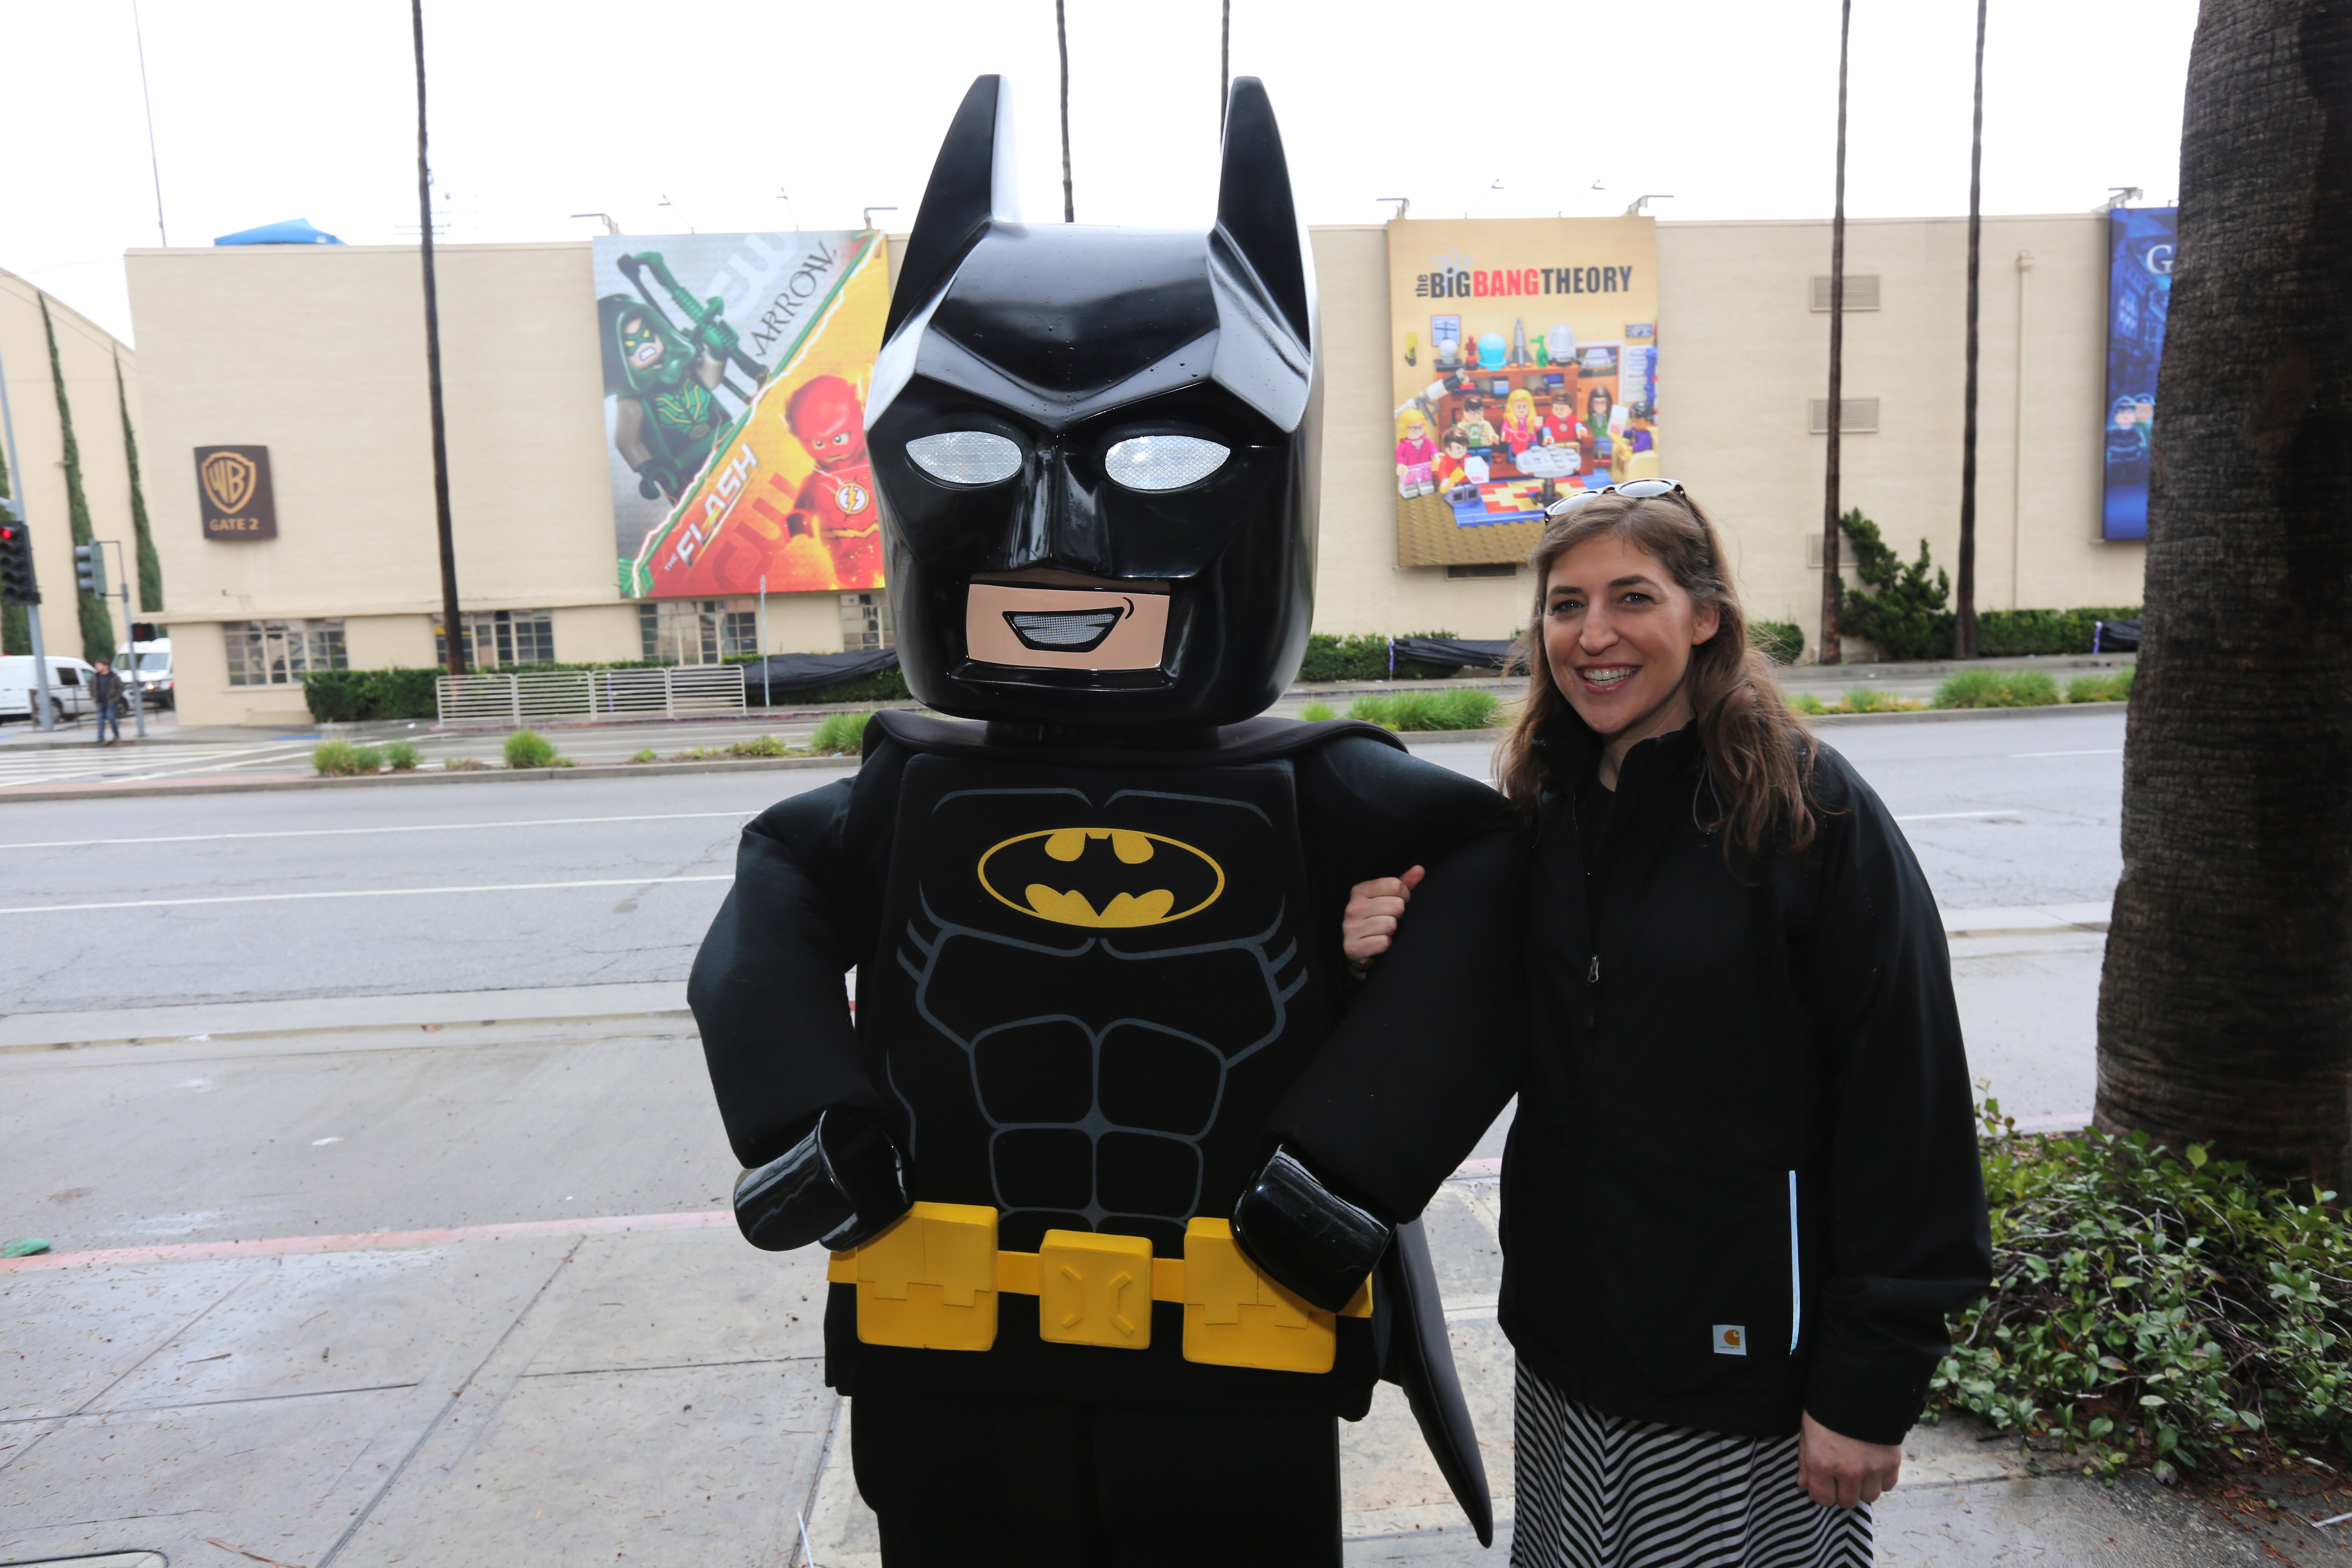 THE BIG BANG THEORY star Mayim Bialik joined LEGO Batman to unveil the LEGO version of THE BIG BANG THEORY billboard. (Photo Credit: © 2017 Warner Bros. Entertainment Inc. All Rights Reserved.)